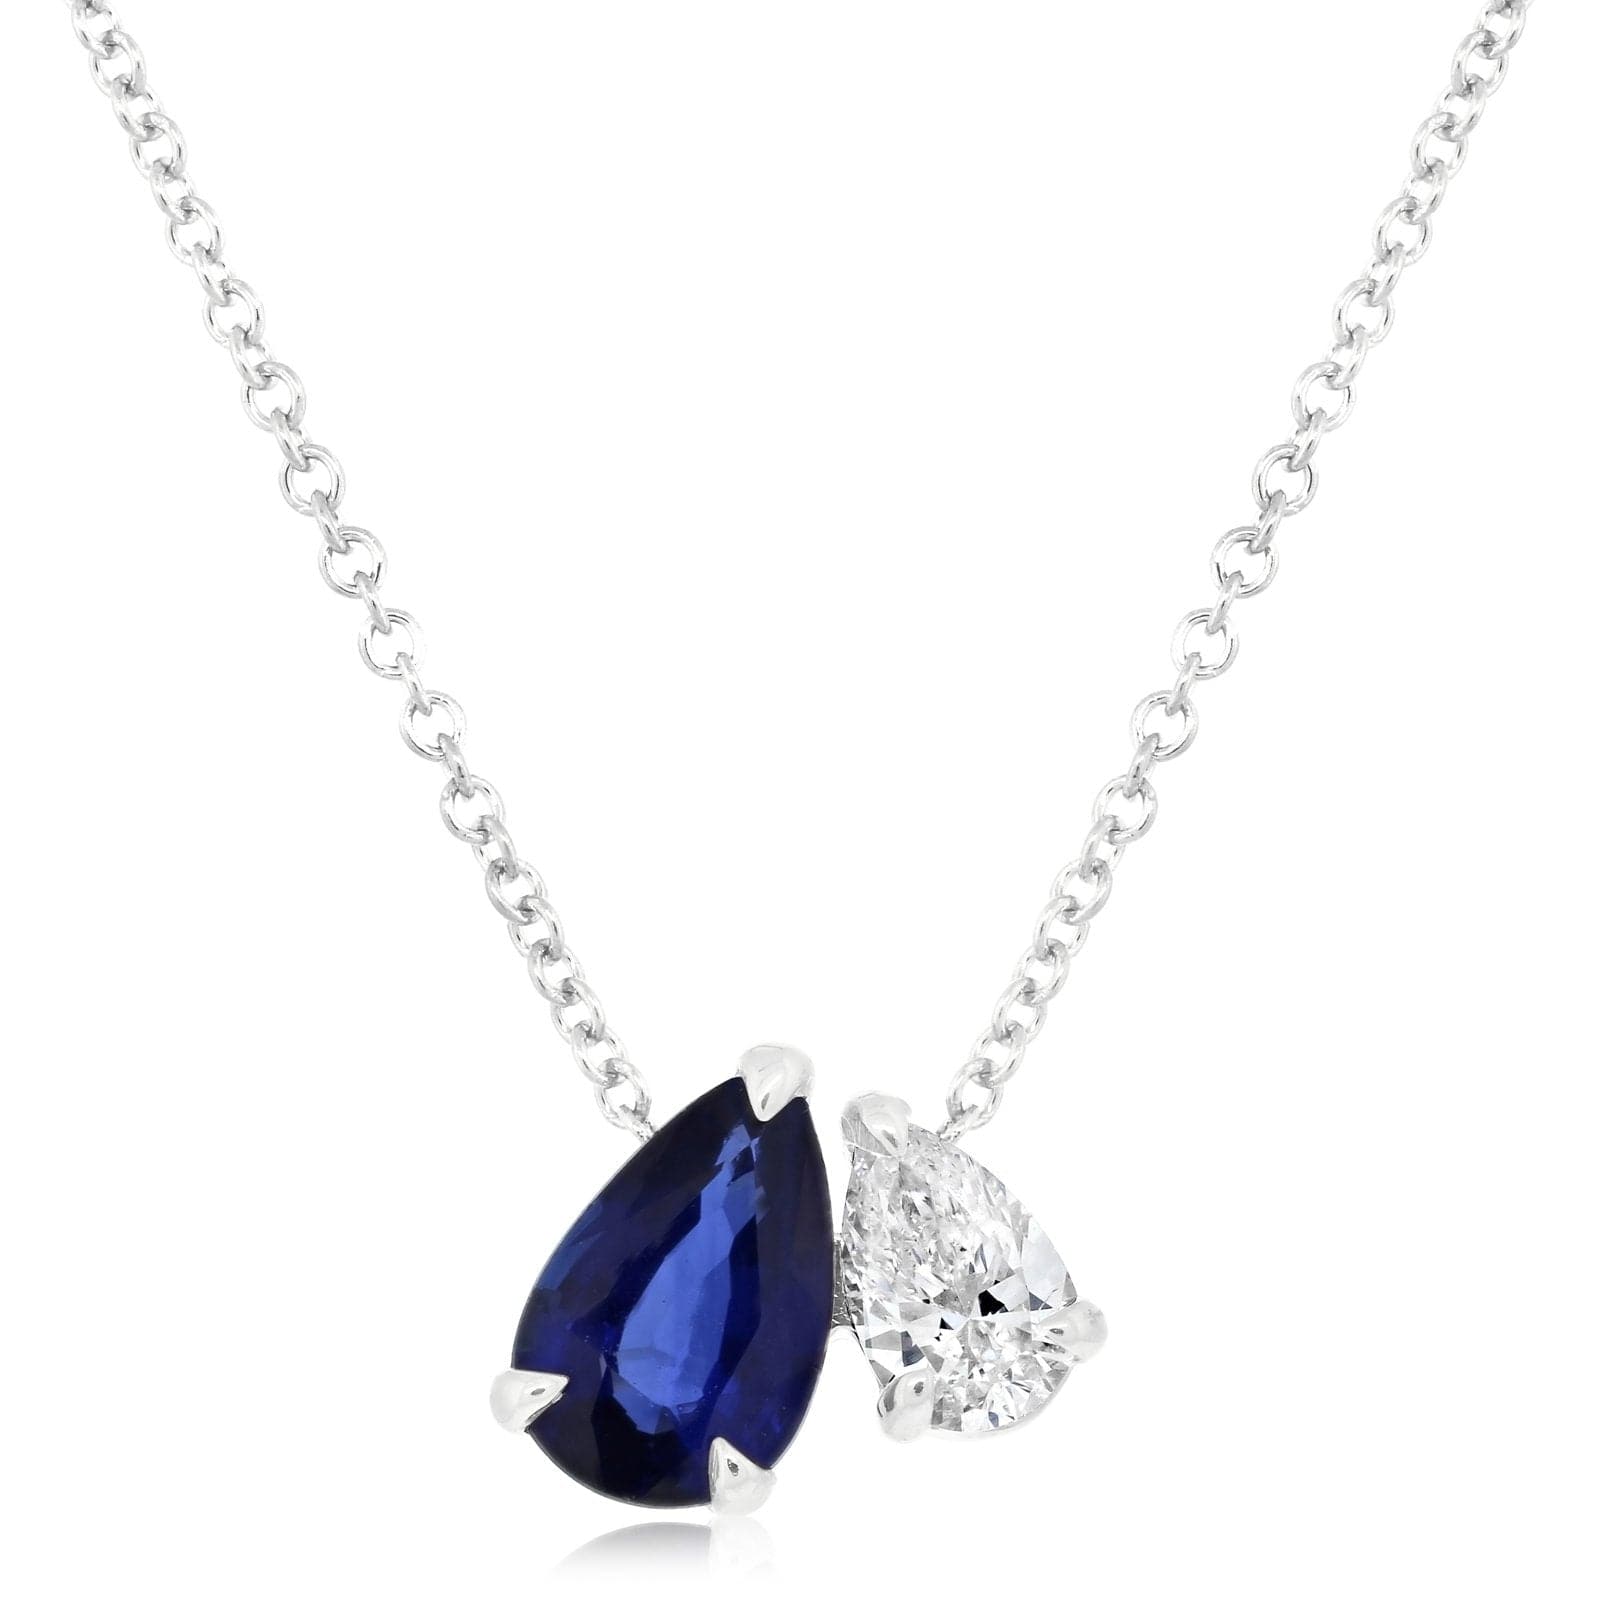 Dana Rebecca Taylor Elaine Pear-shaped Diamond Station Necklace